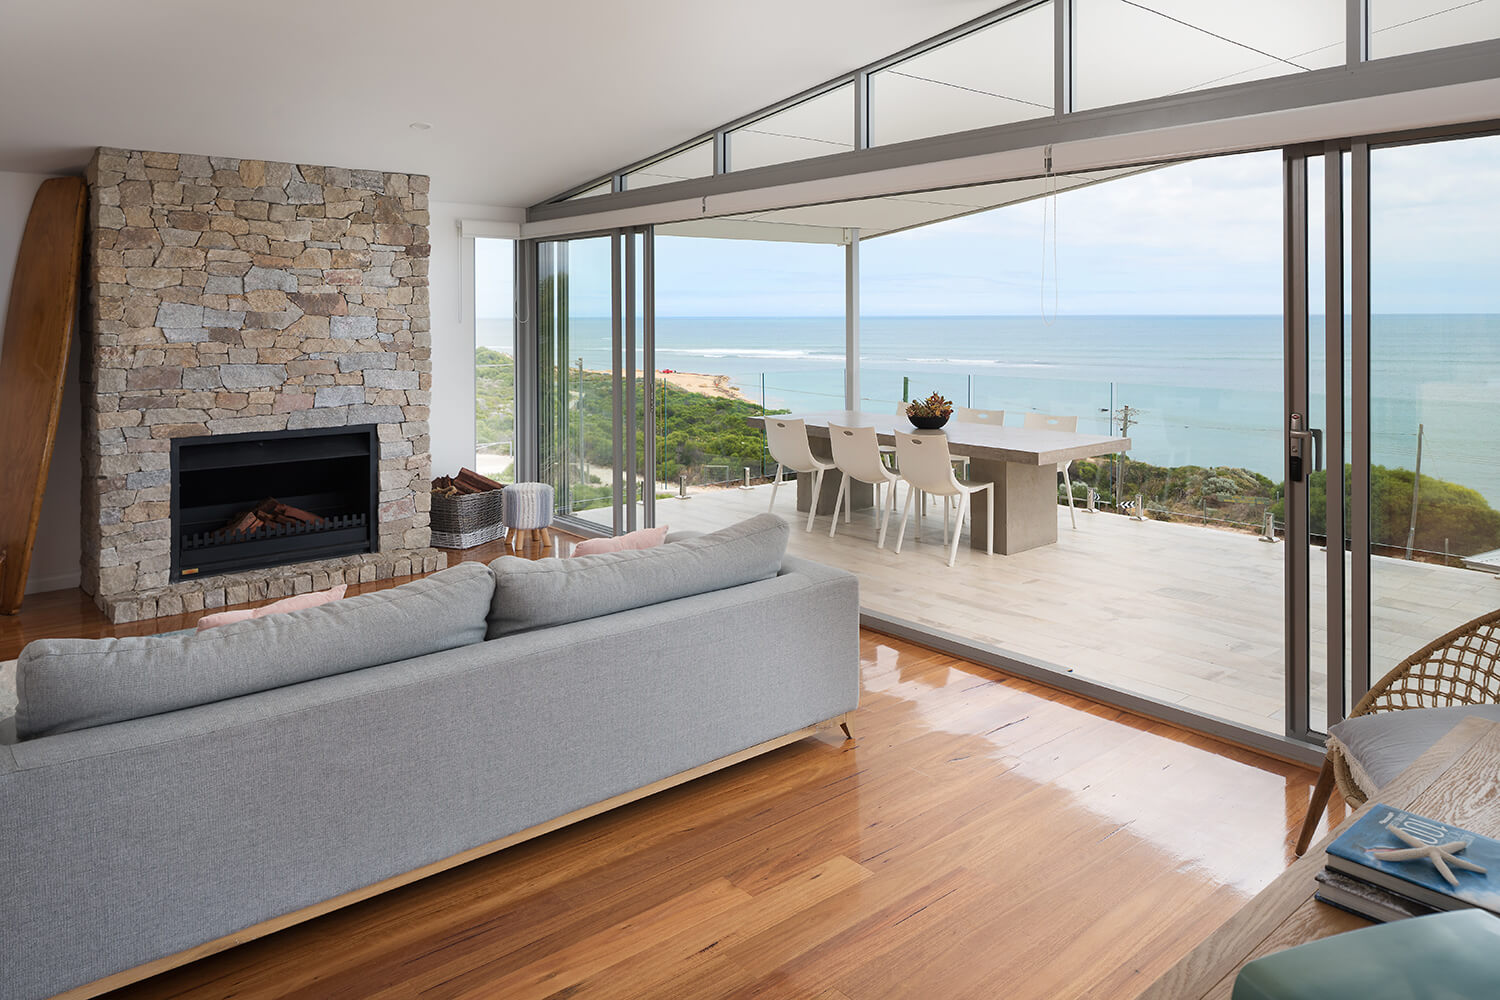 Panamuna Drive - coastal home design